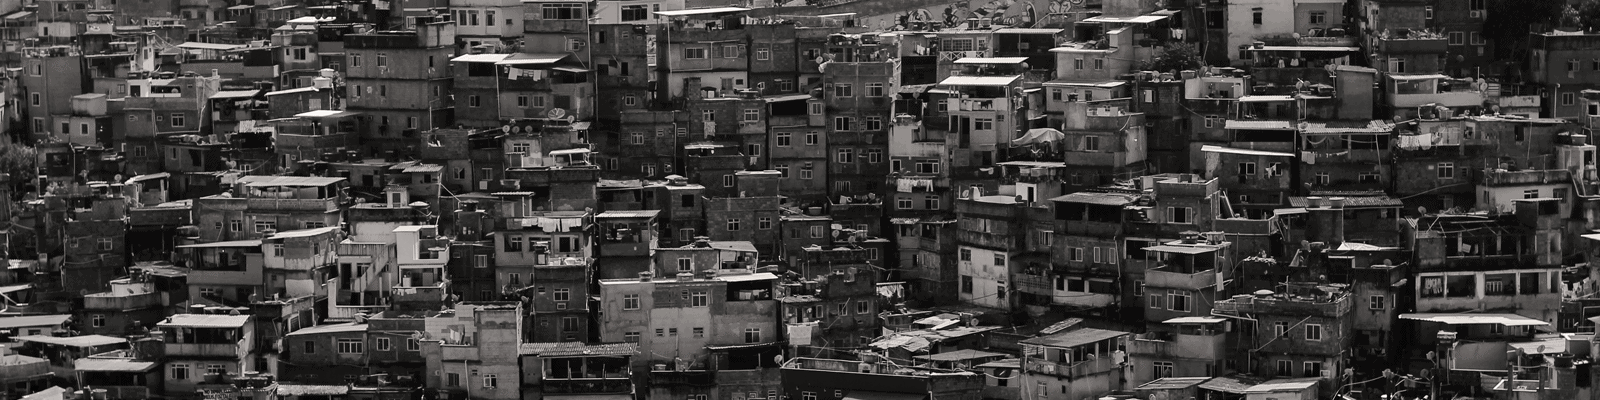 black and white city image